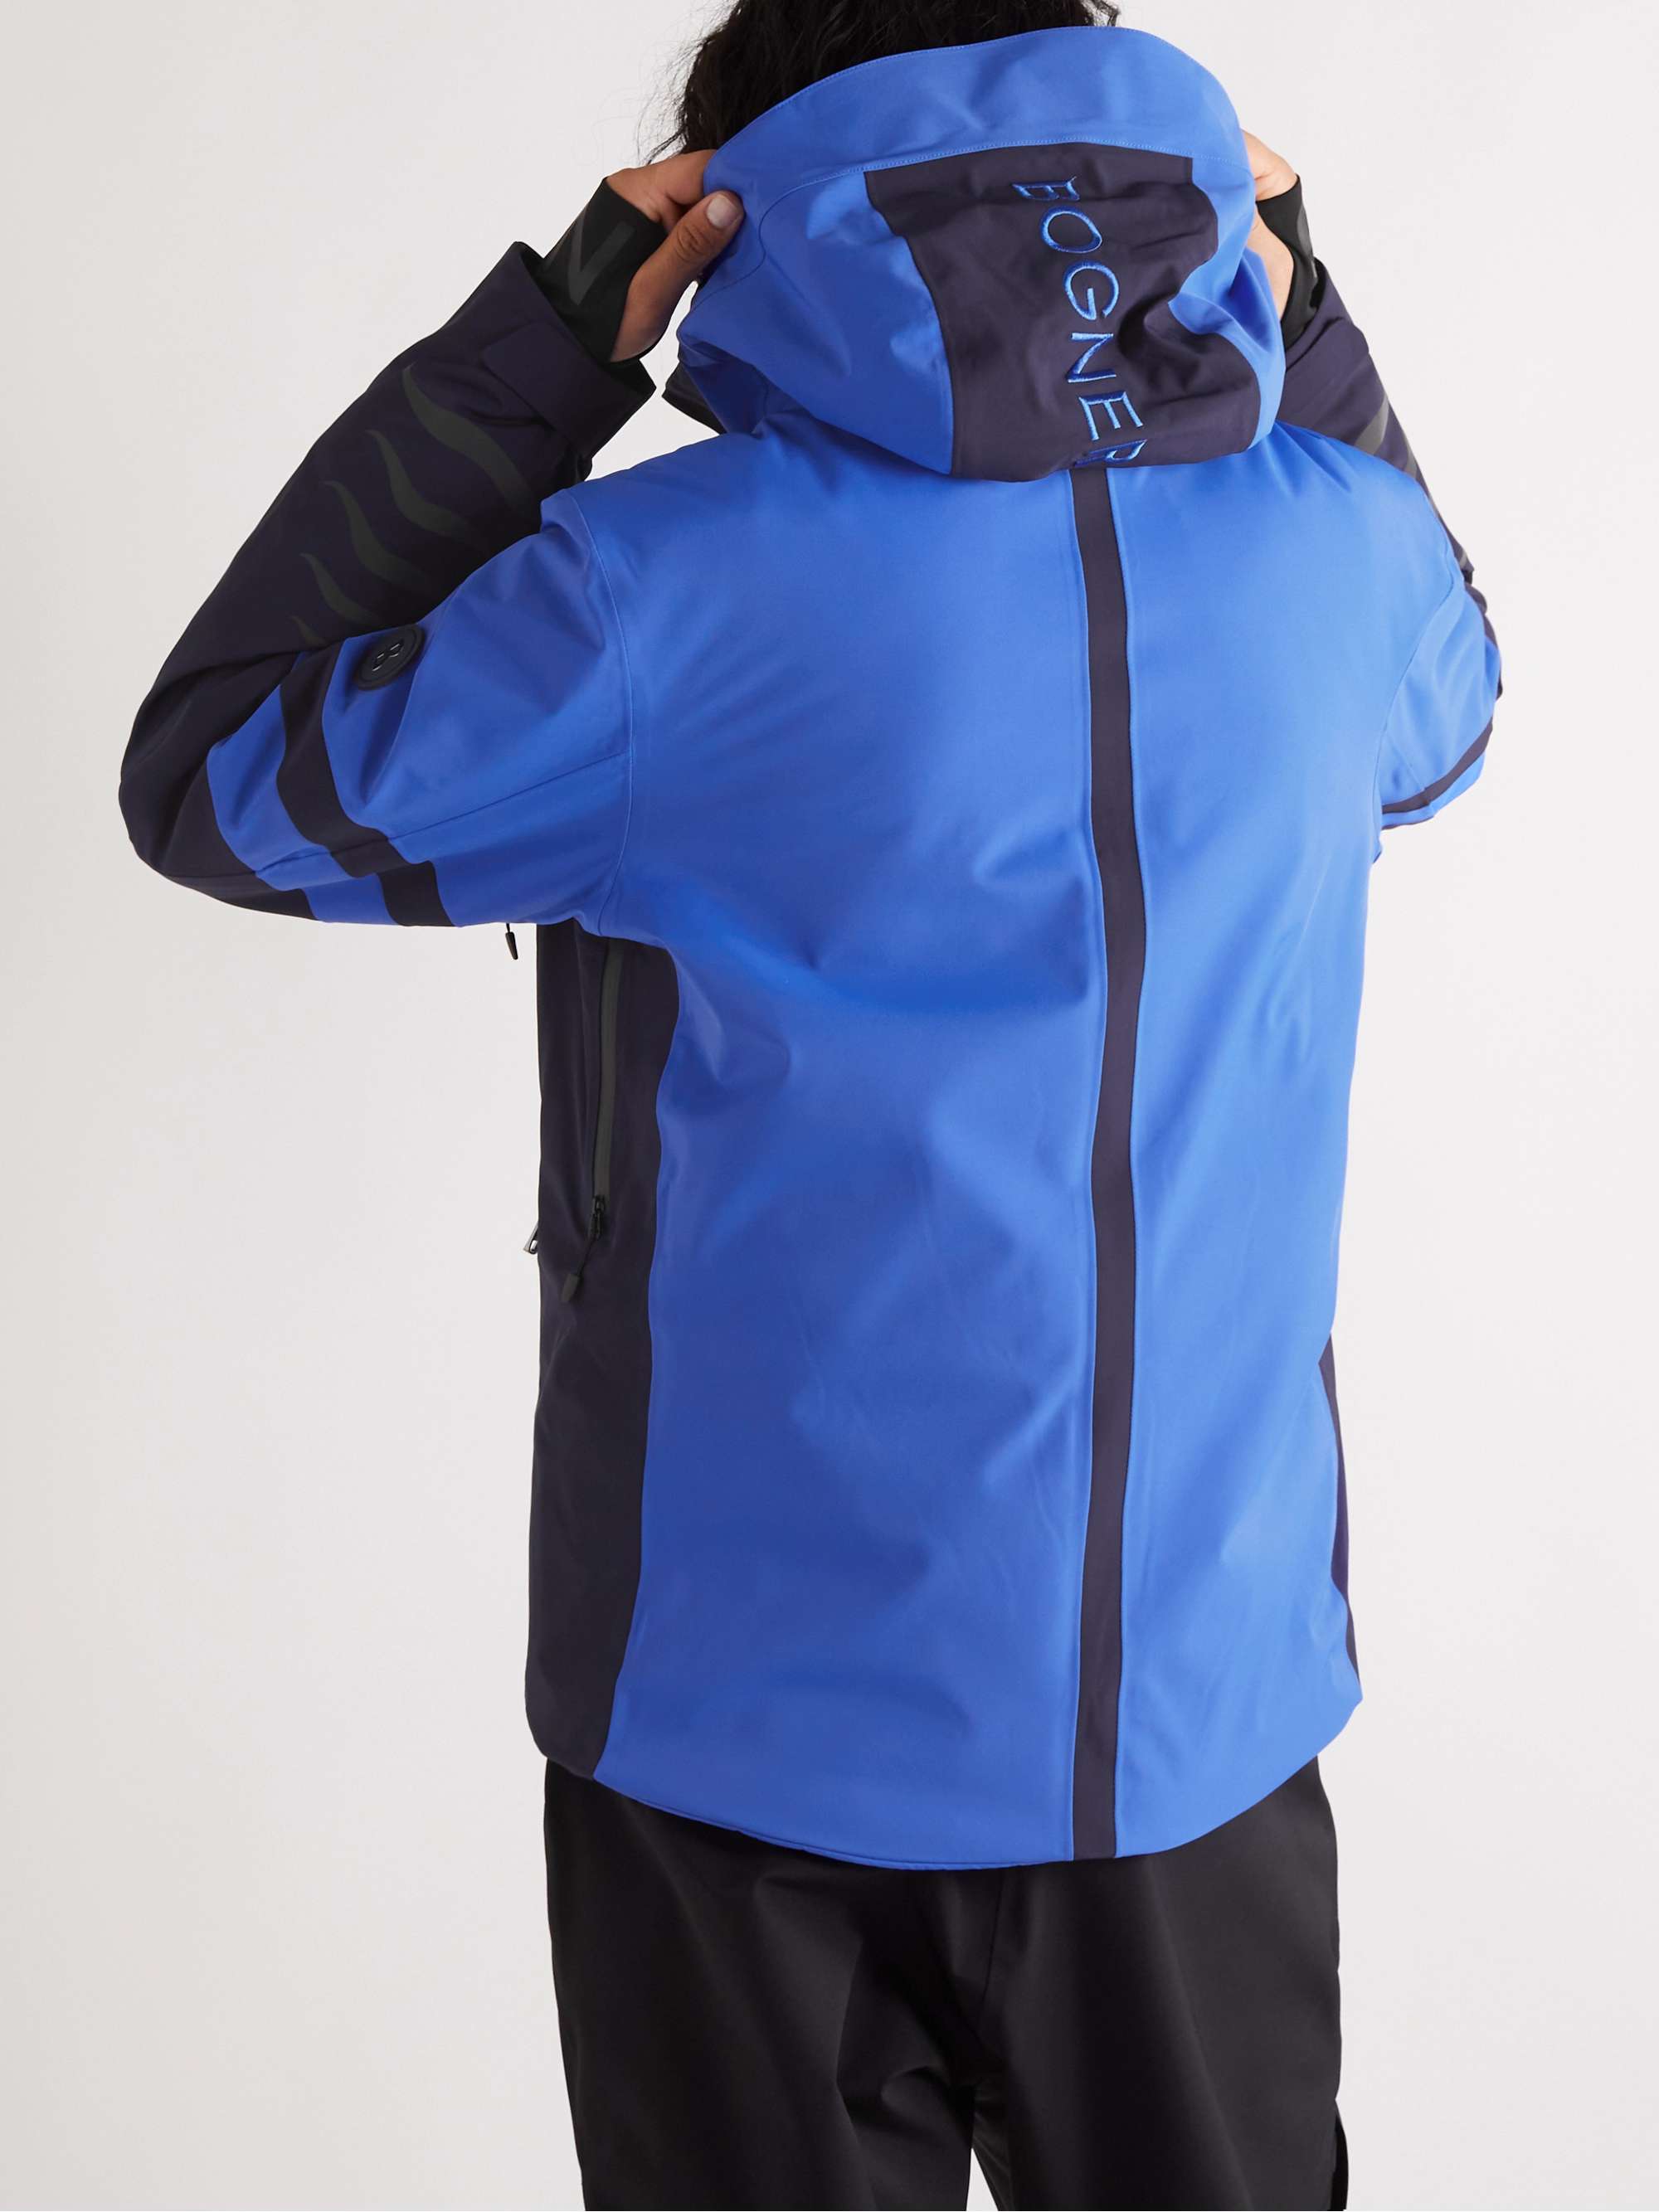 BOGNER Fredy-T Two-Tone Hooded Ski Jacket